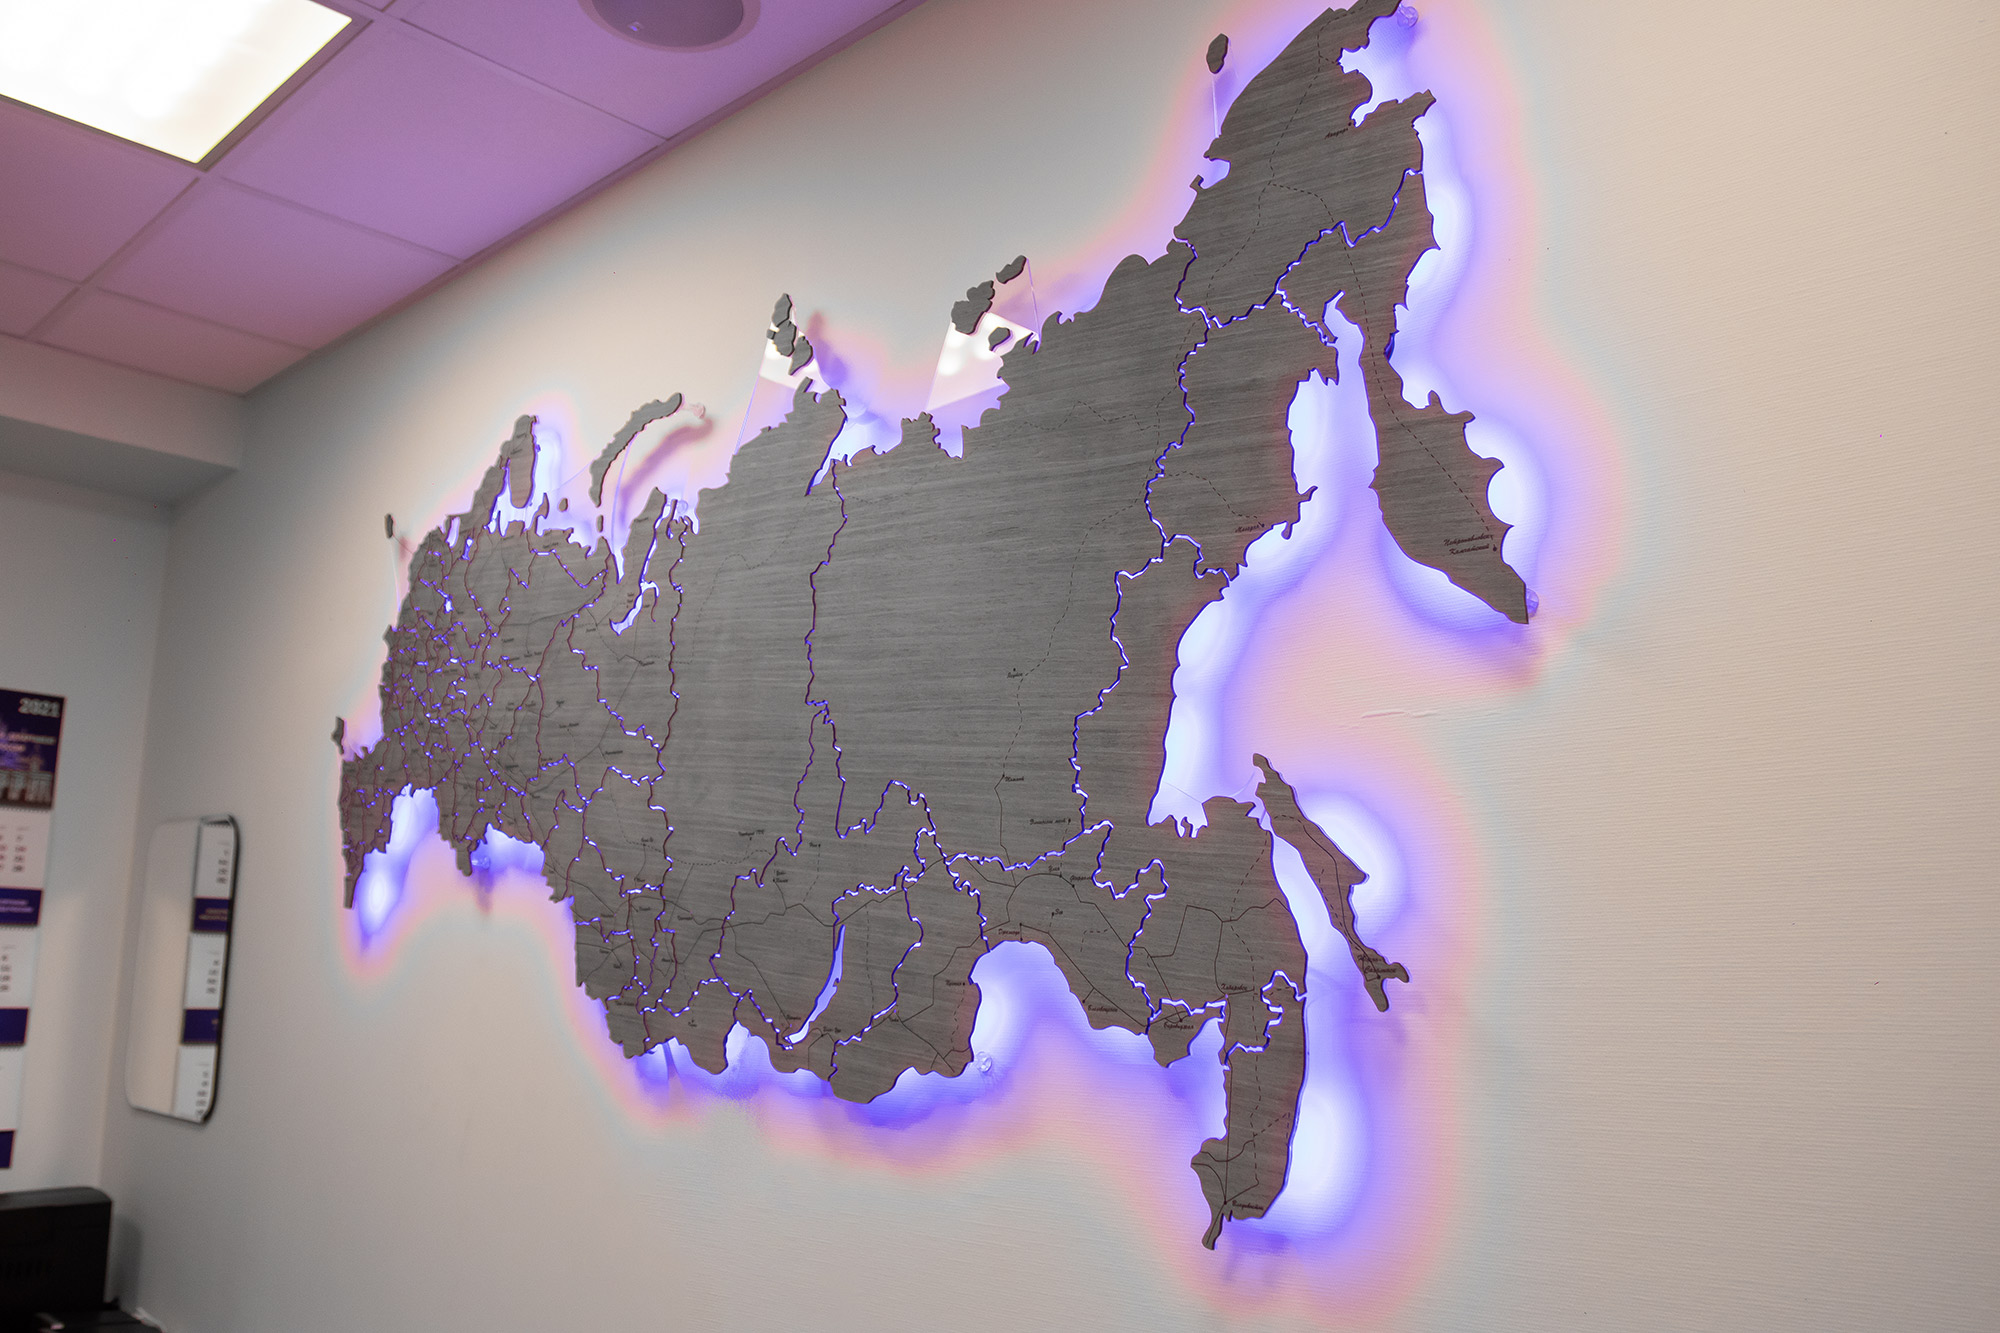 Настенная карта с подсветкой. Карта настенная с подсветкой. Карта России настенная с подсветкой. Карта России настенная деревянная с подсветкой. Карта России деревянная с подсветкой на черном фоне.